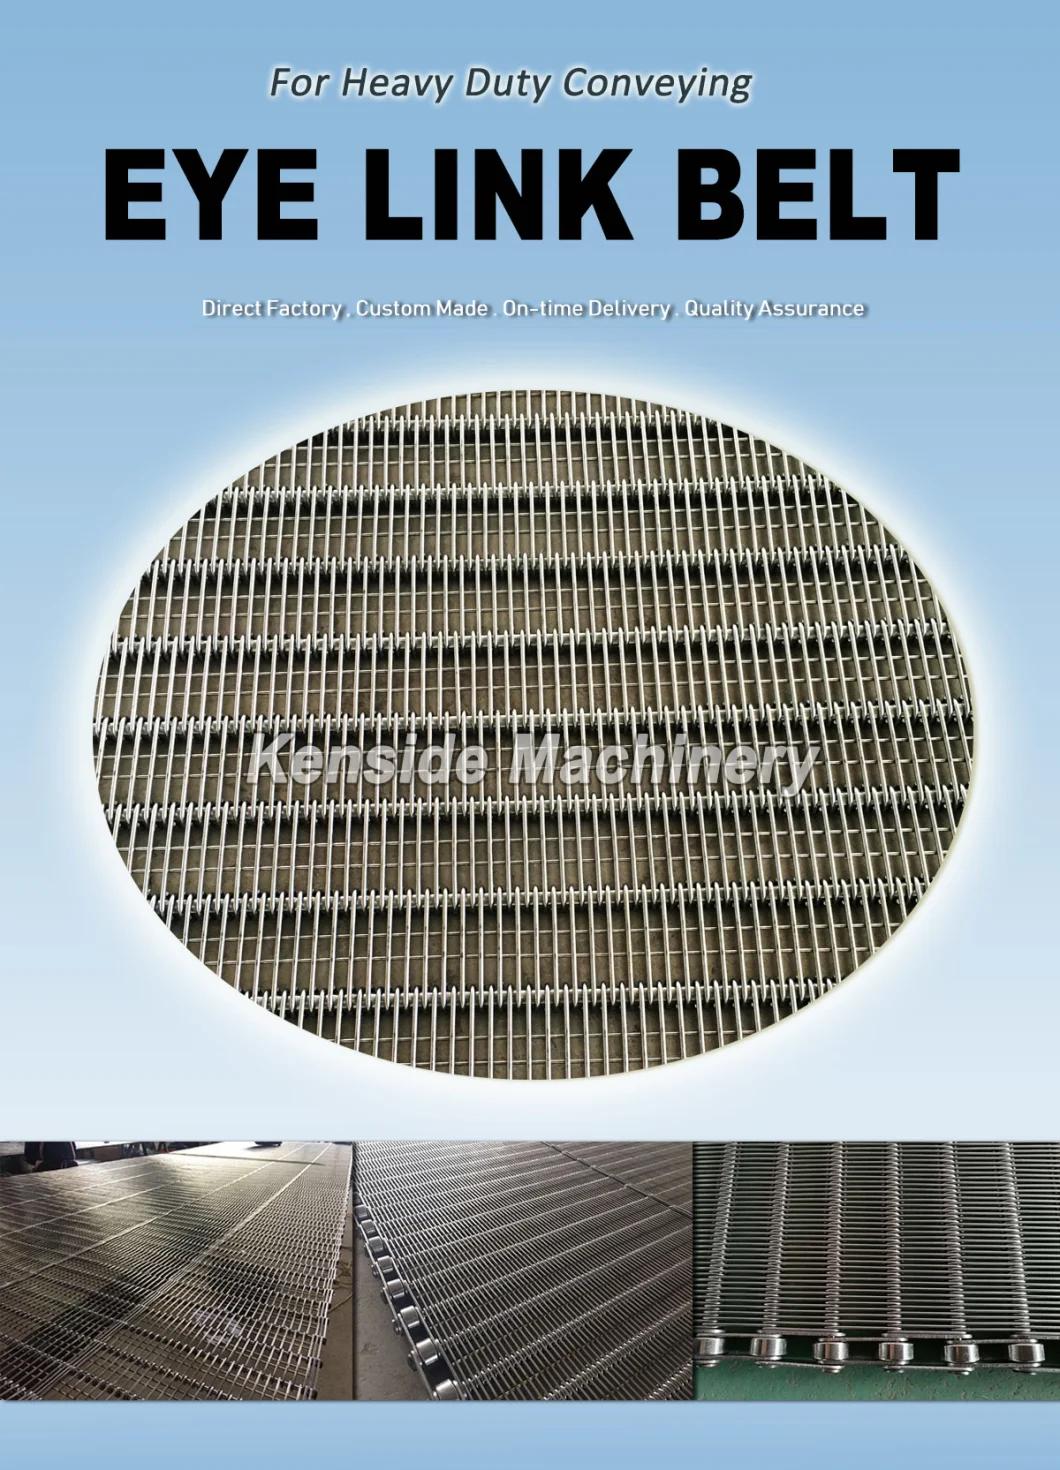 Eye Link Belt for Tunnel Freezer